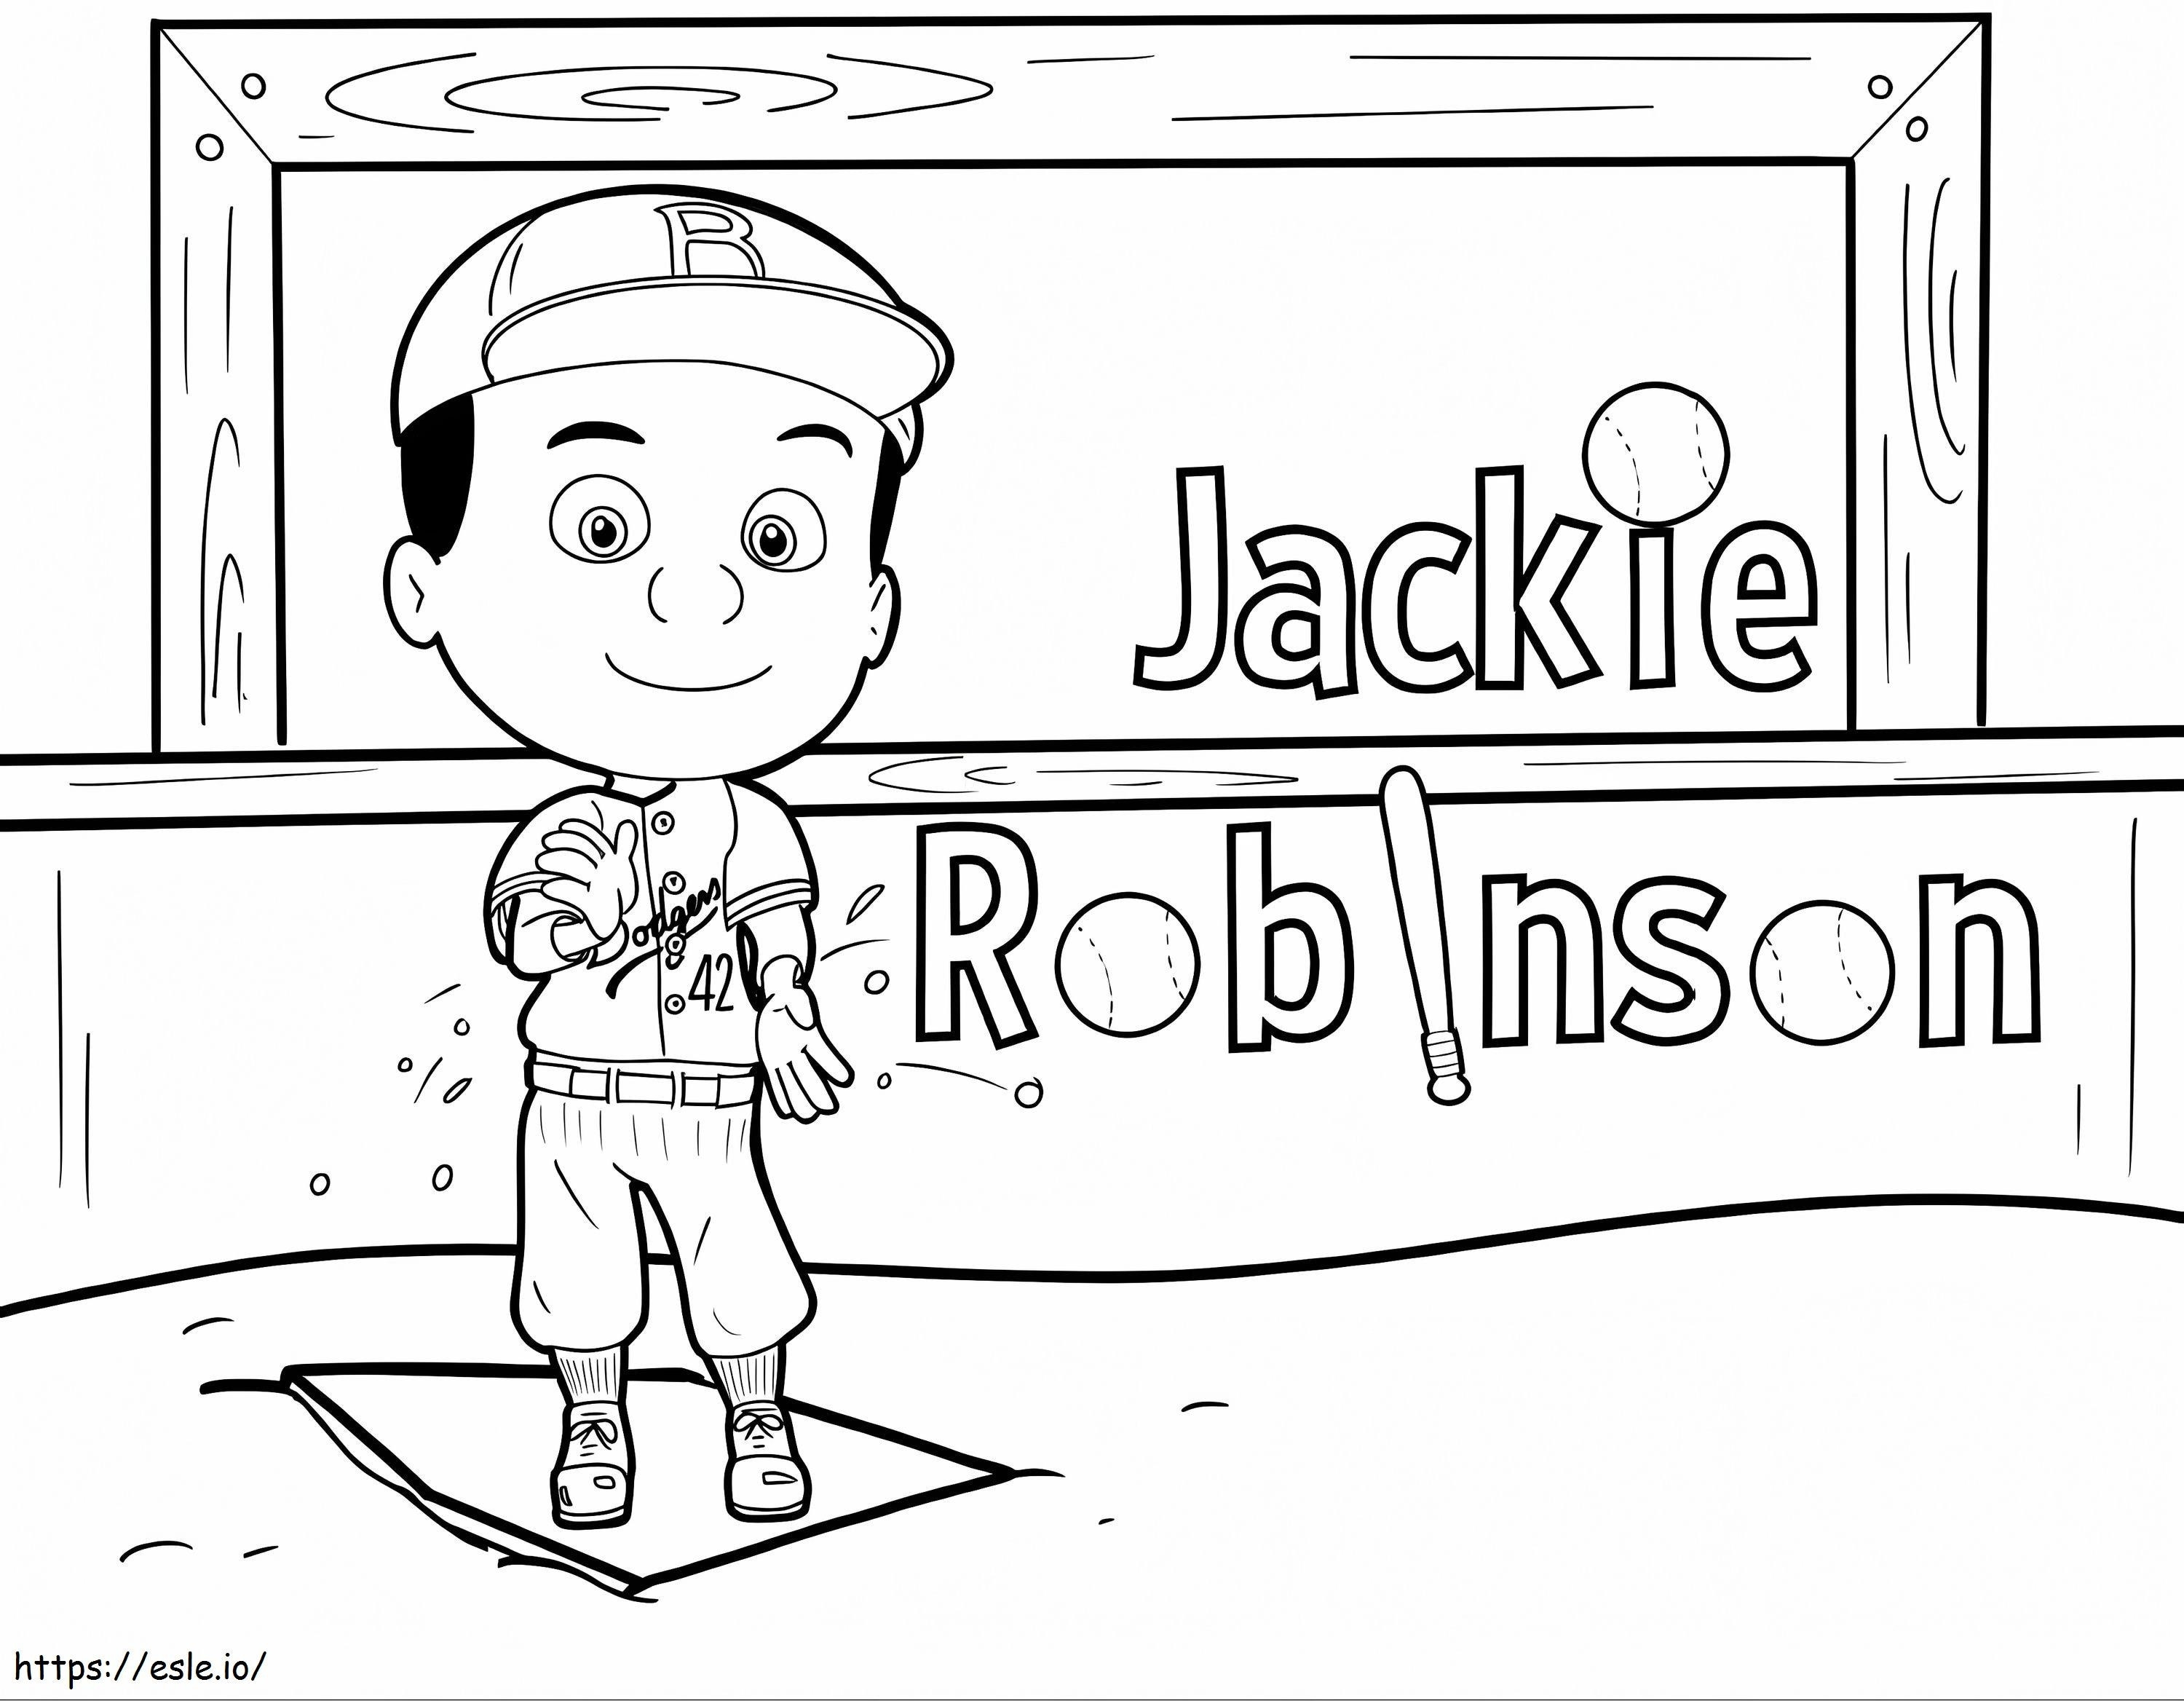 Coloriage La petite Jackie Robinson à imprimer dessin